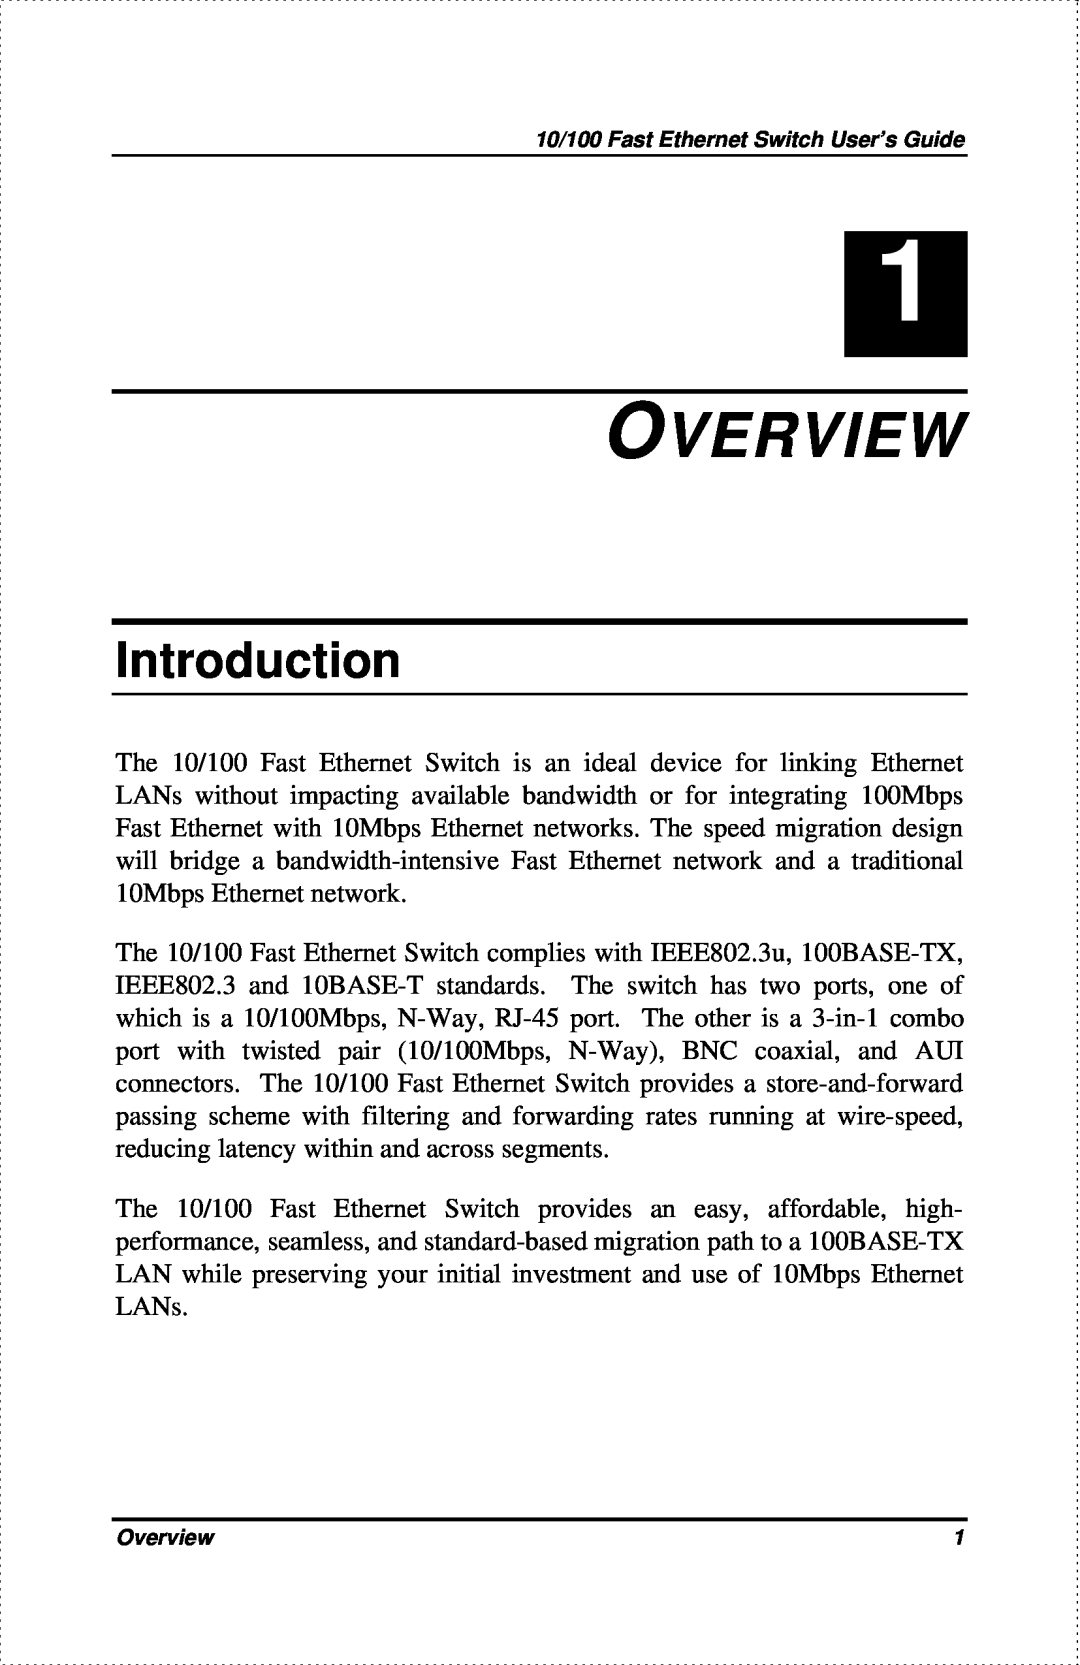 D-Link DES-802 manual Overview, Introduction 